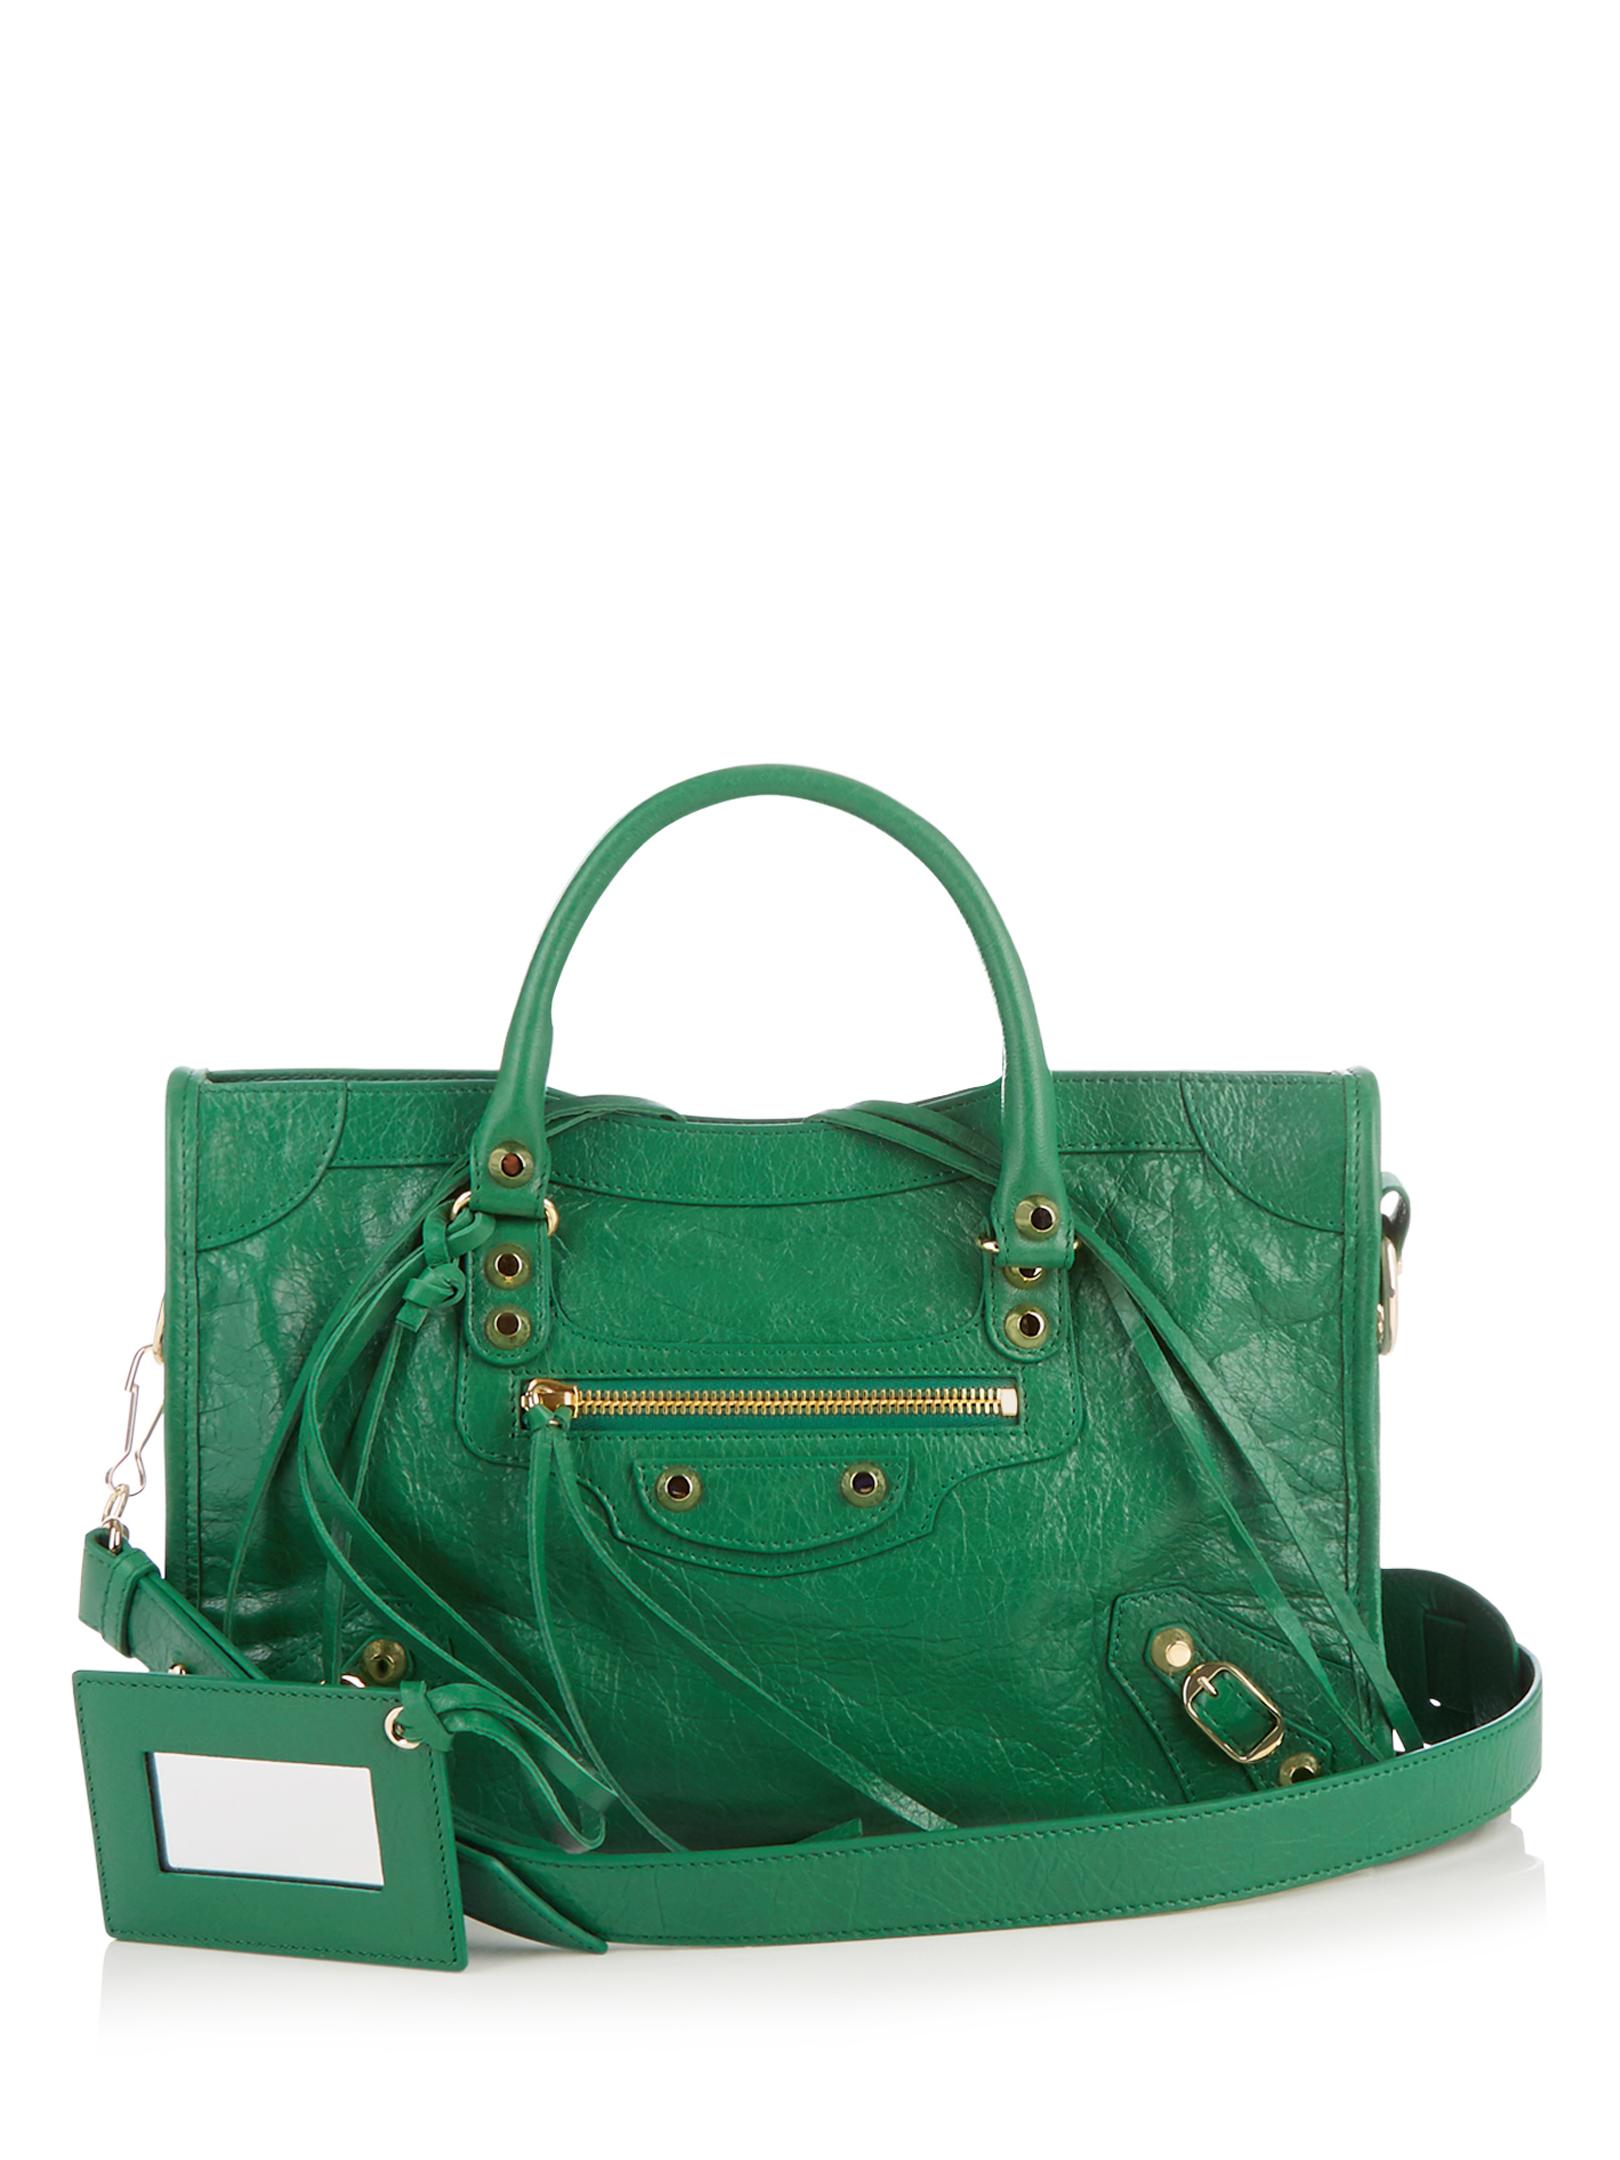 Lyst - Balenciaga Classic Metallic Edge City Small Leather Bag in Green